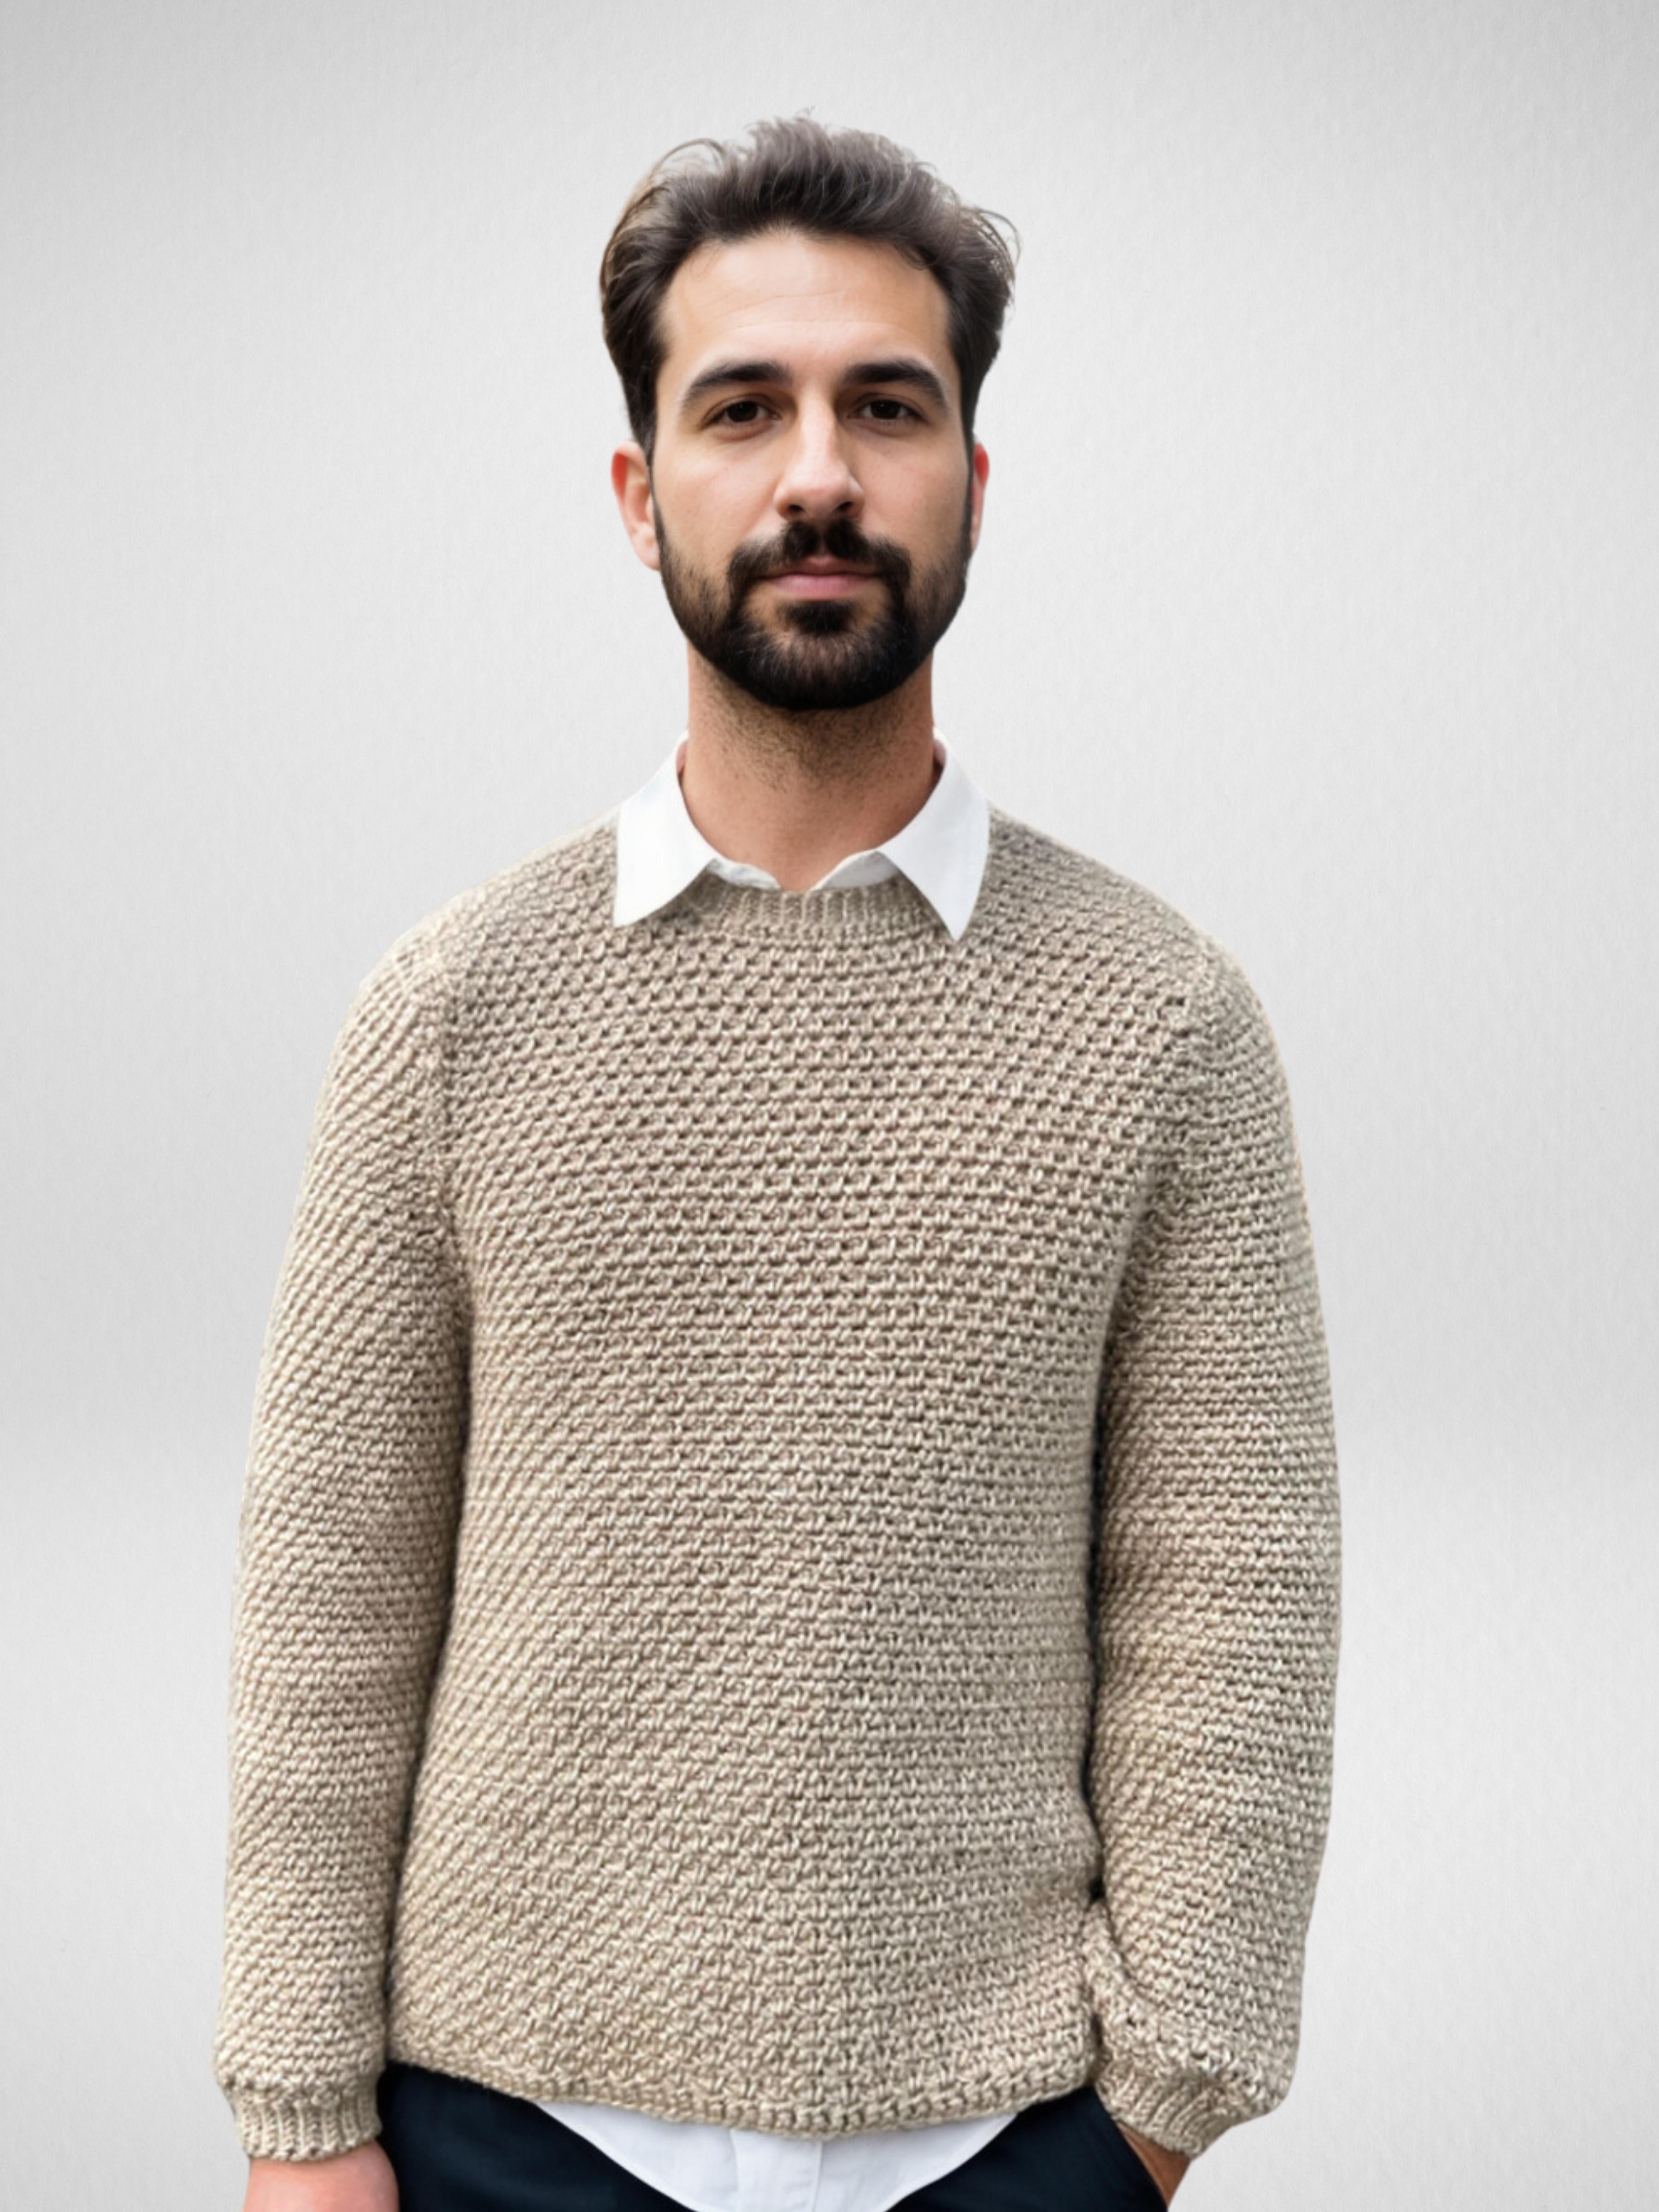 Urban Chic Sweater